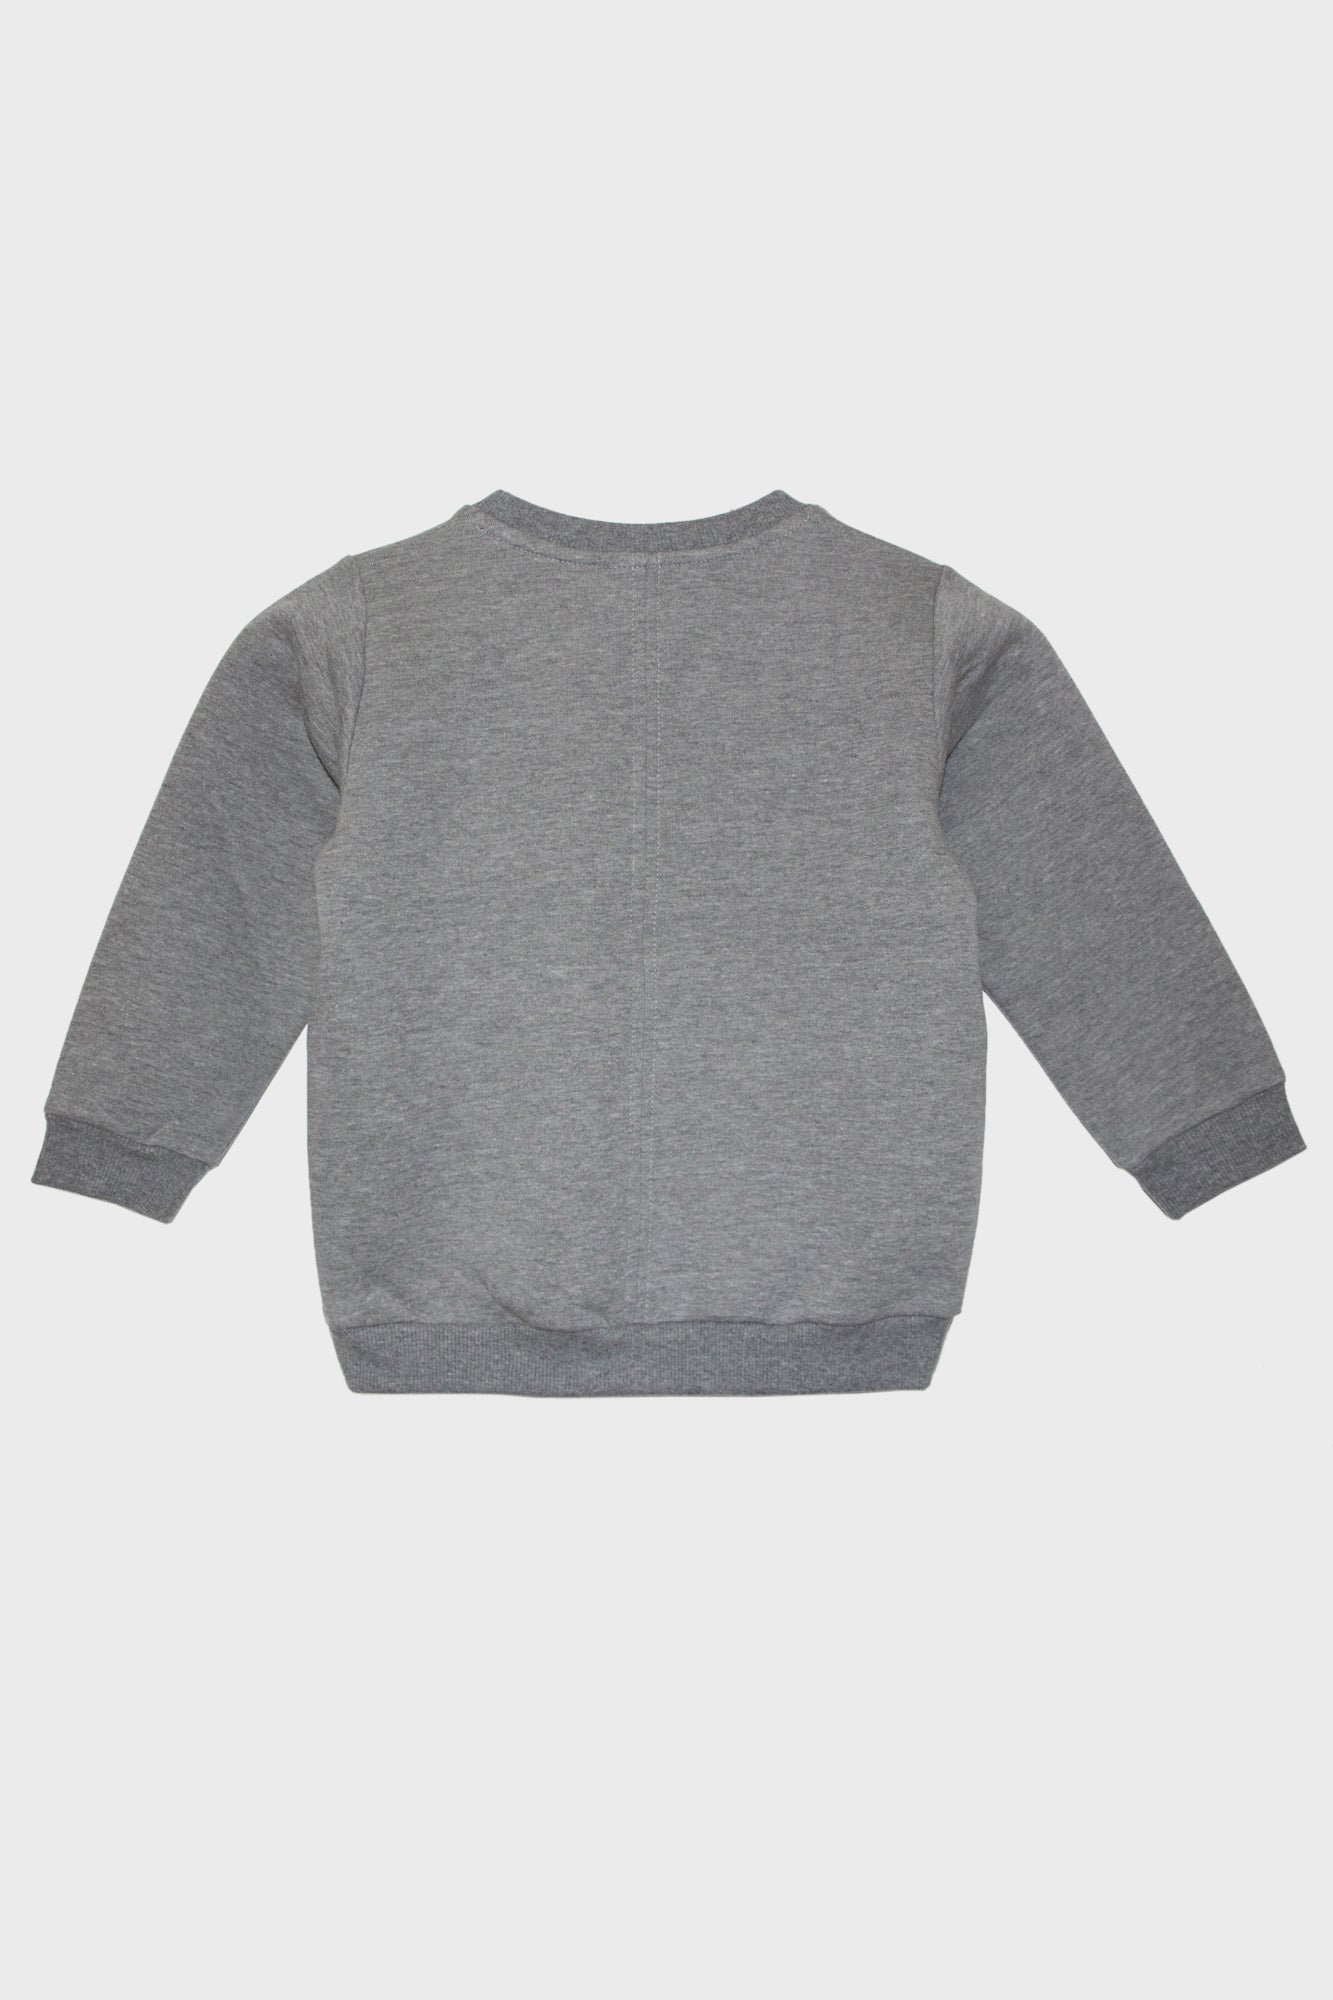 Kid’s One Wolf sweater, grey/dark grey with red logo